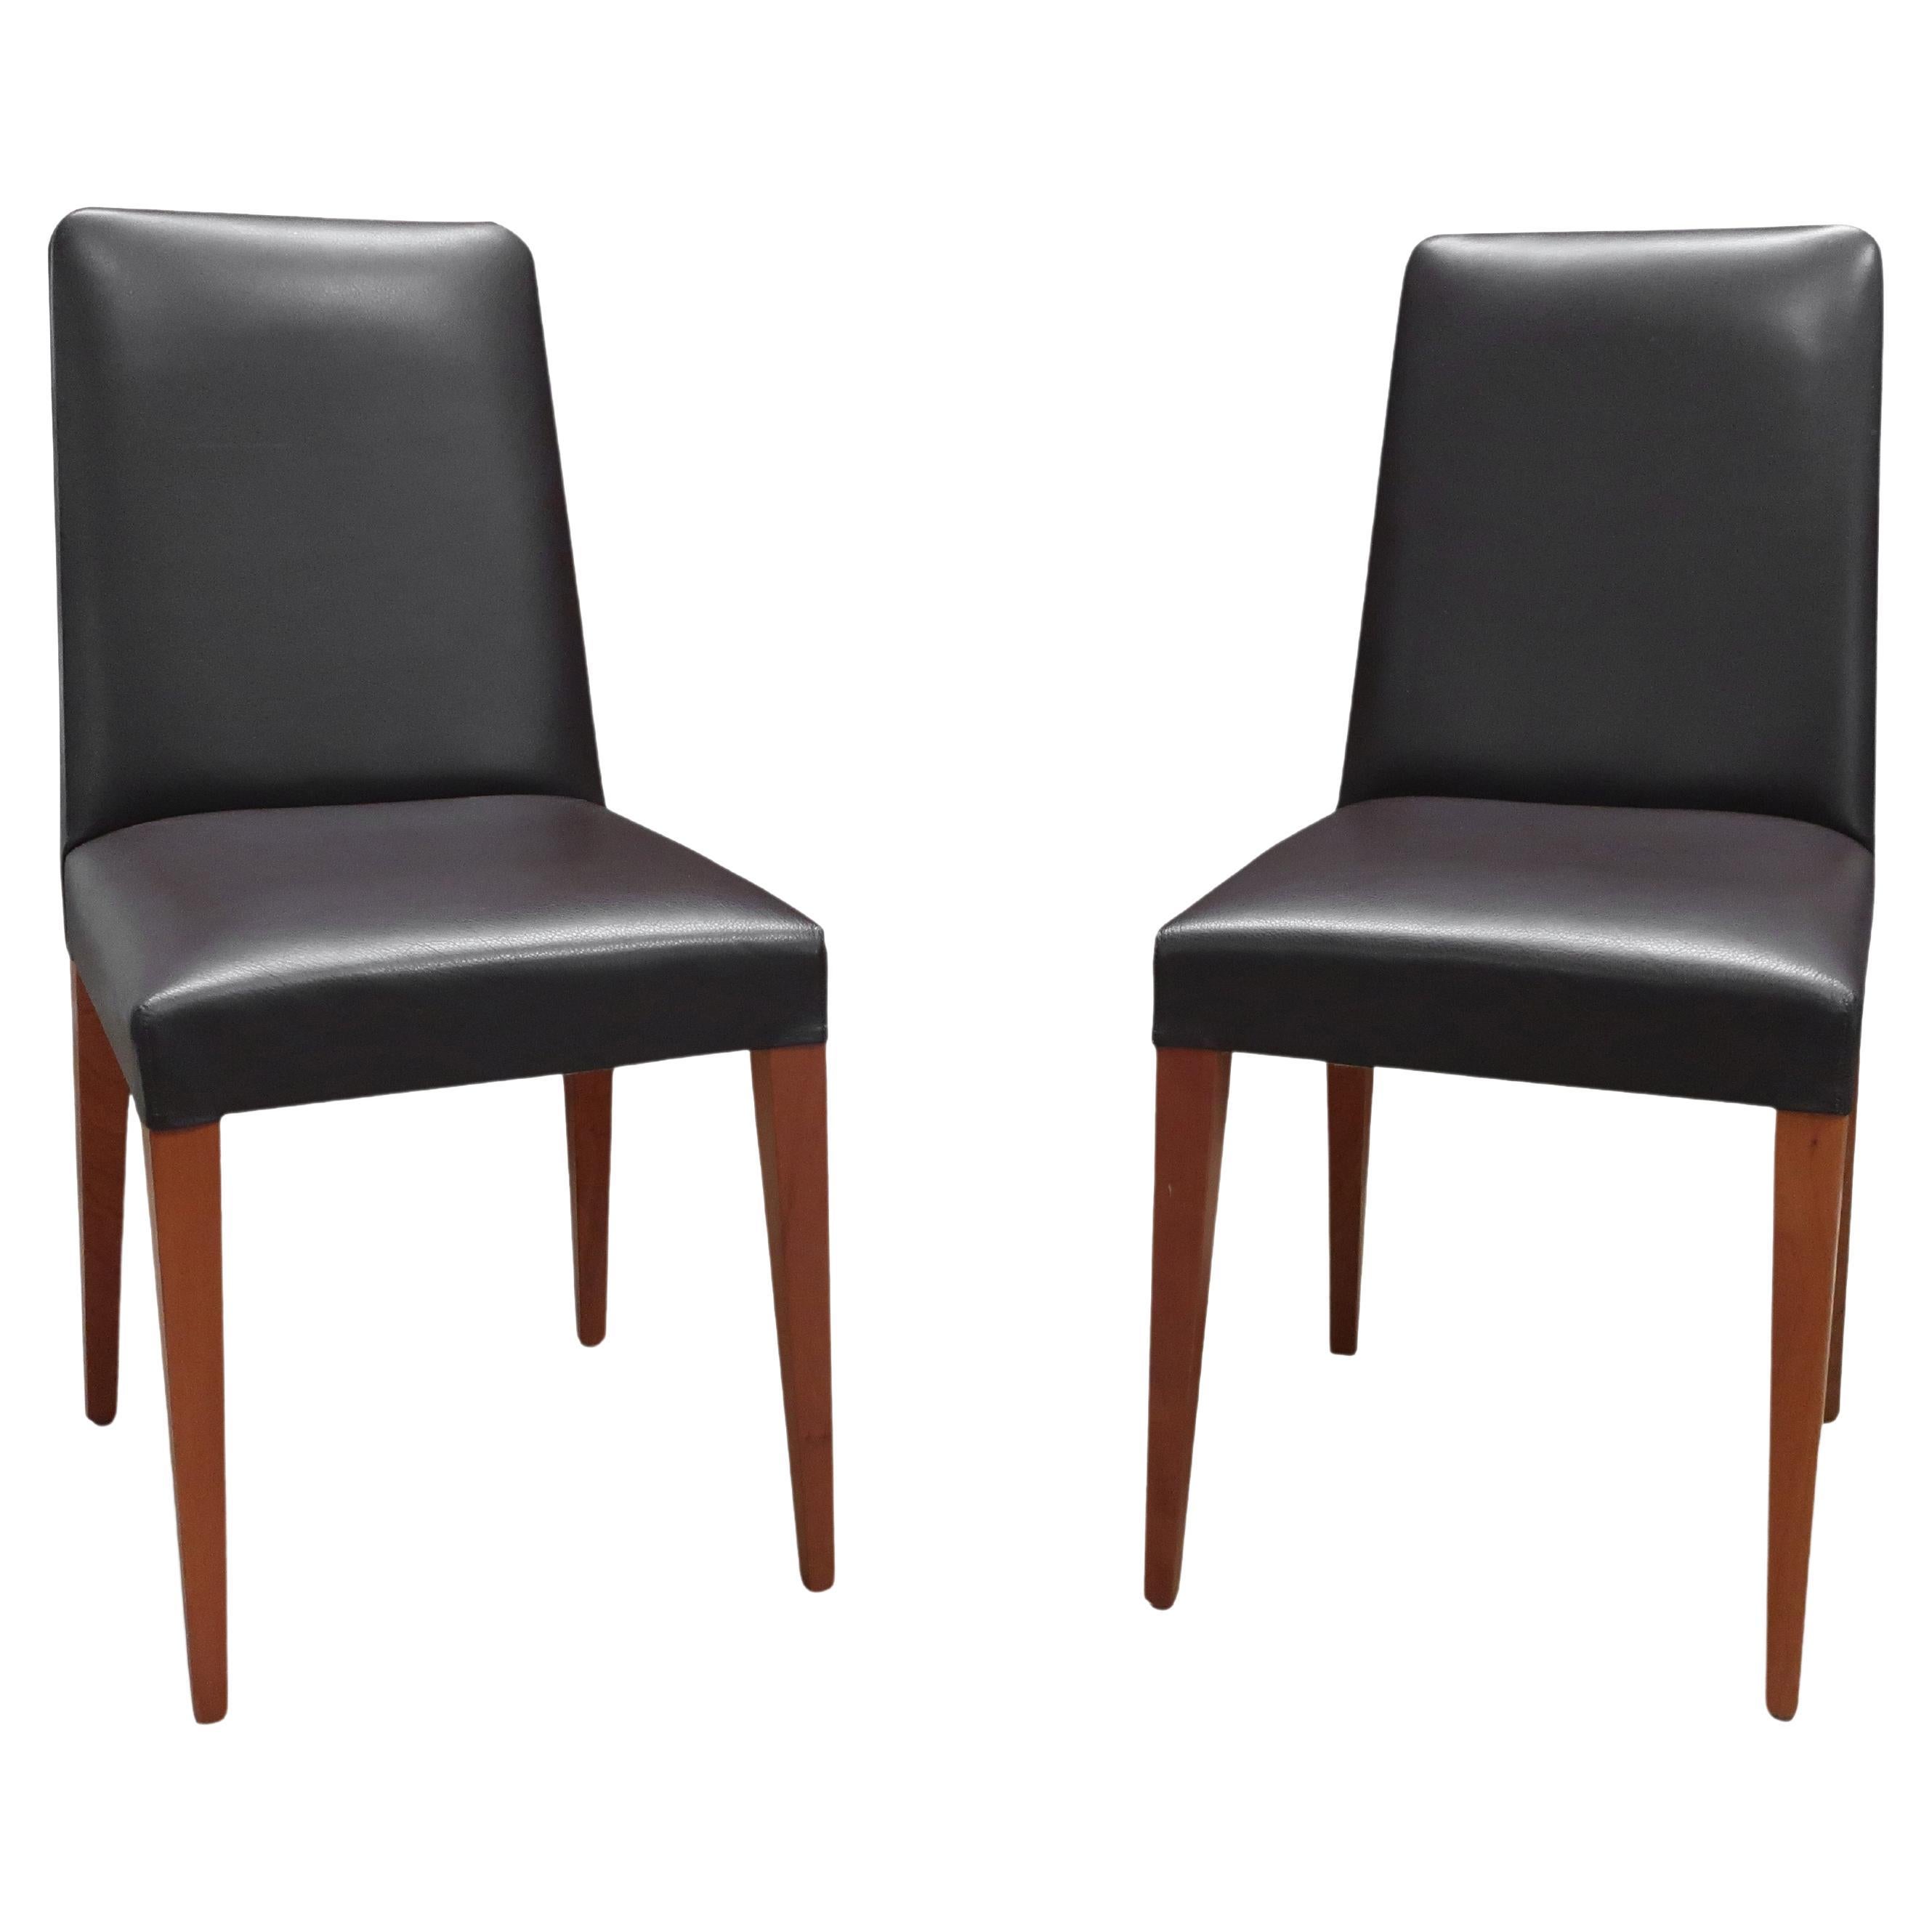 Pair of Brown Leather "Classic Chair" by Roberto Lazzeroni for Ceccotti Collezio For Sale